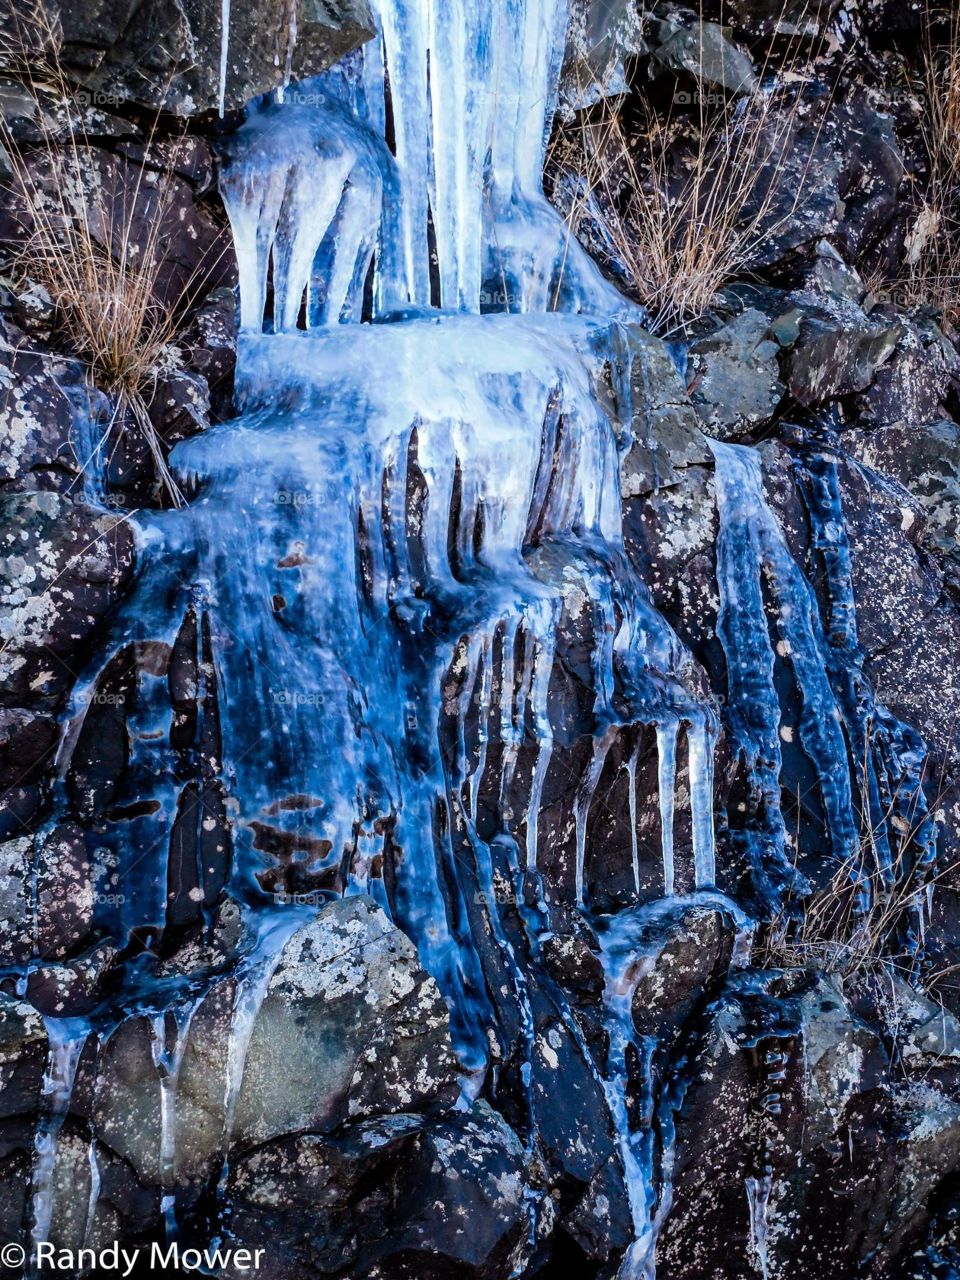 Frozen "waterfalls" in the mountains along skyline drive